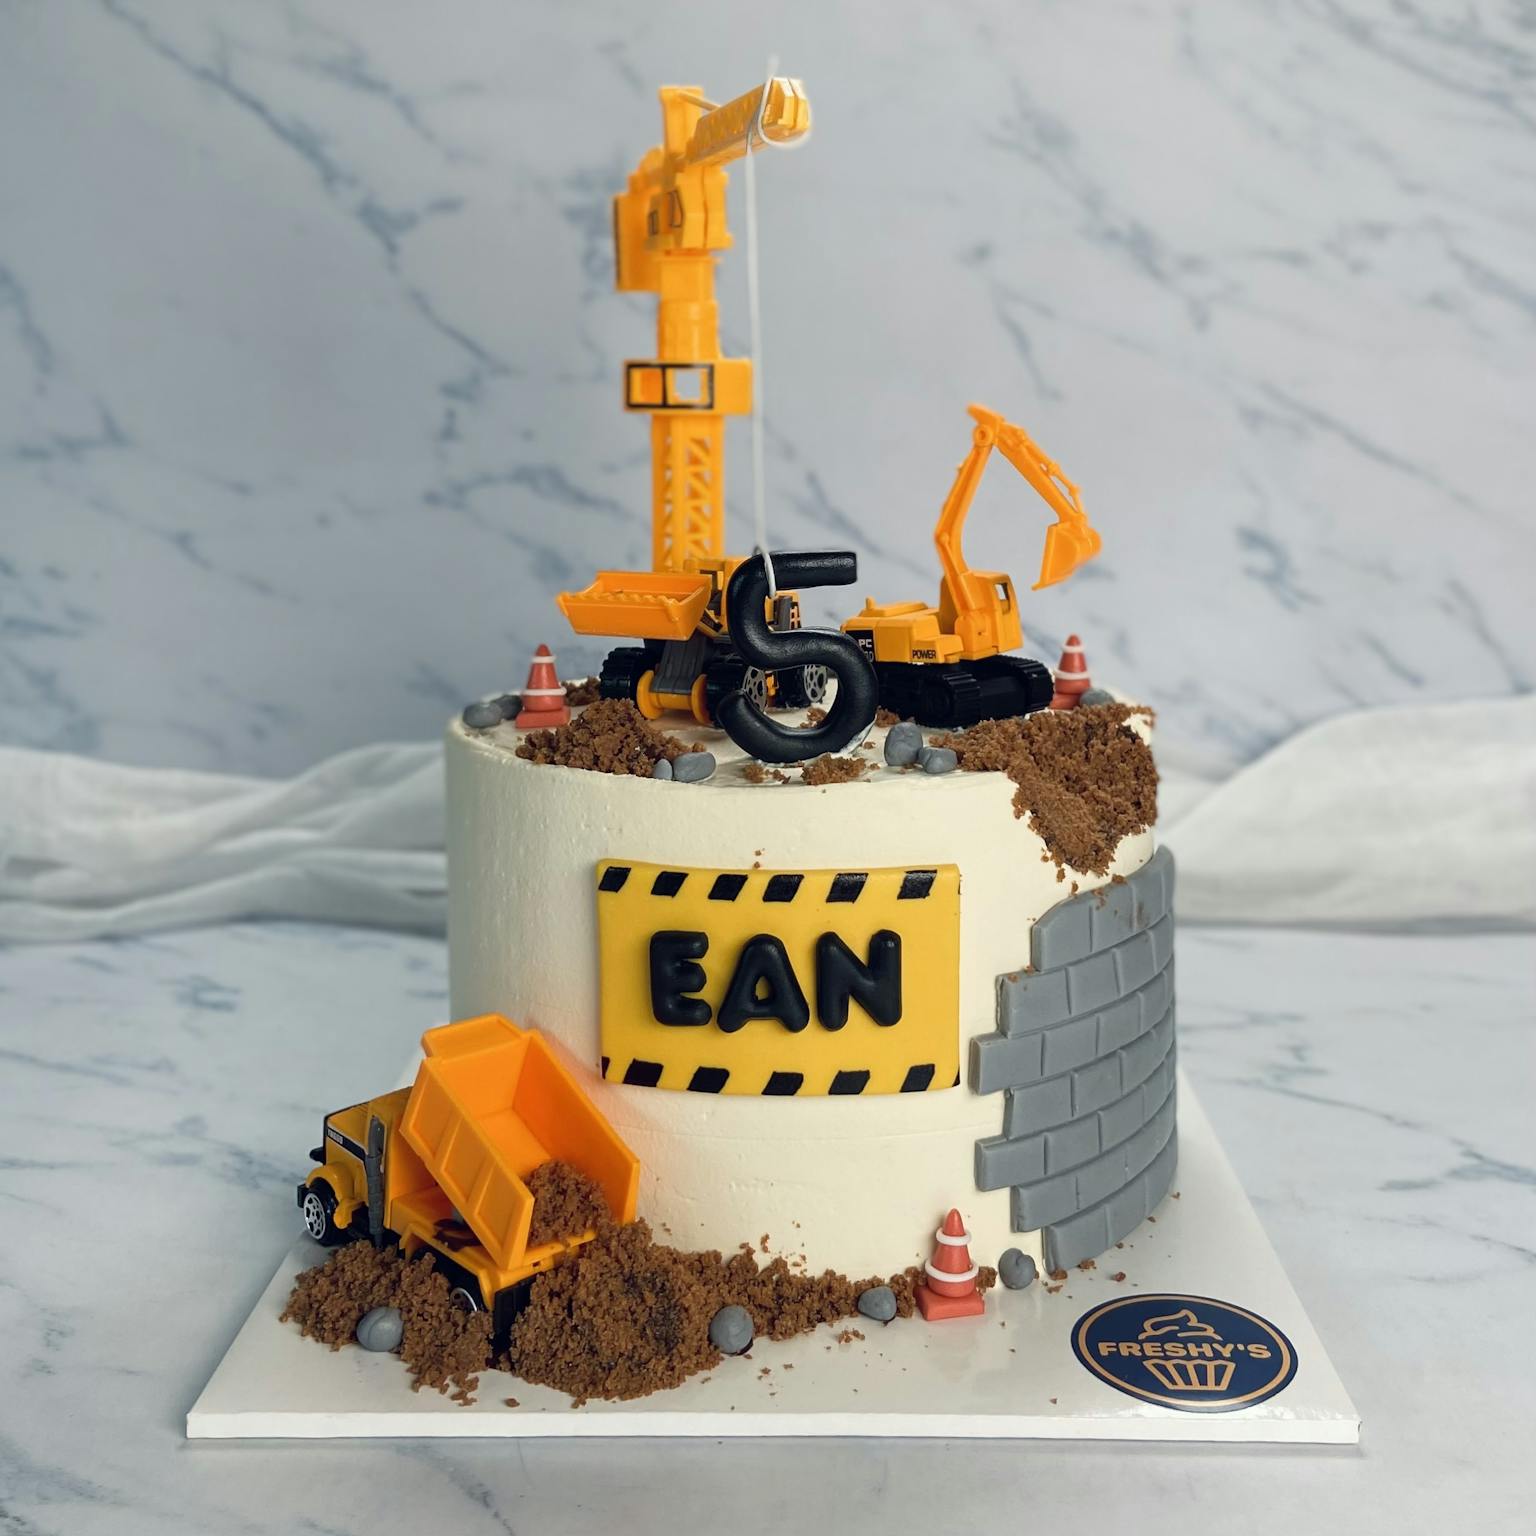 100% edible fondant sculpted construction theme cake